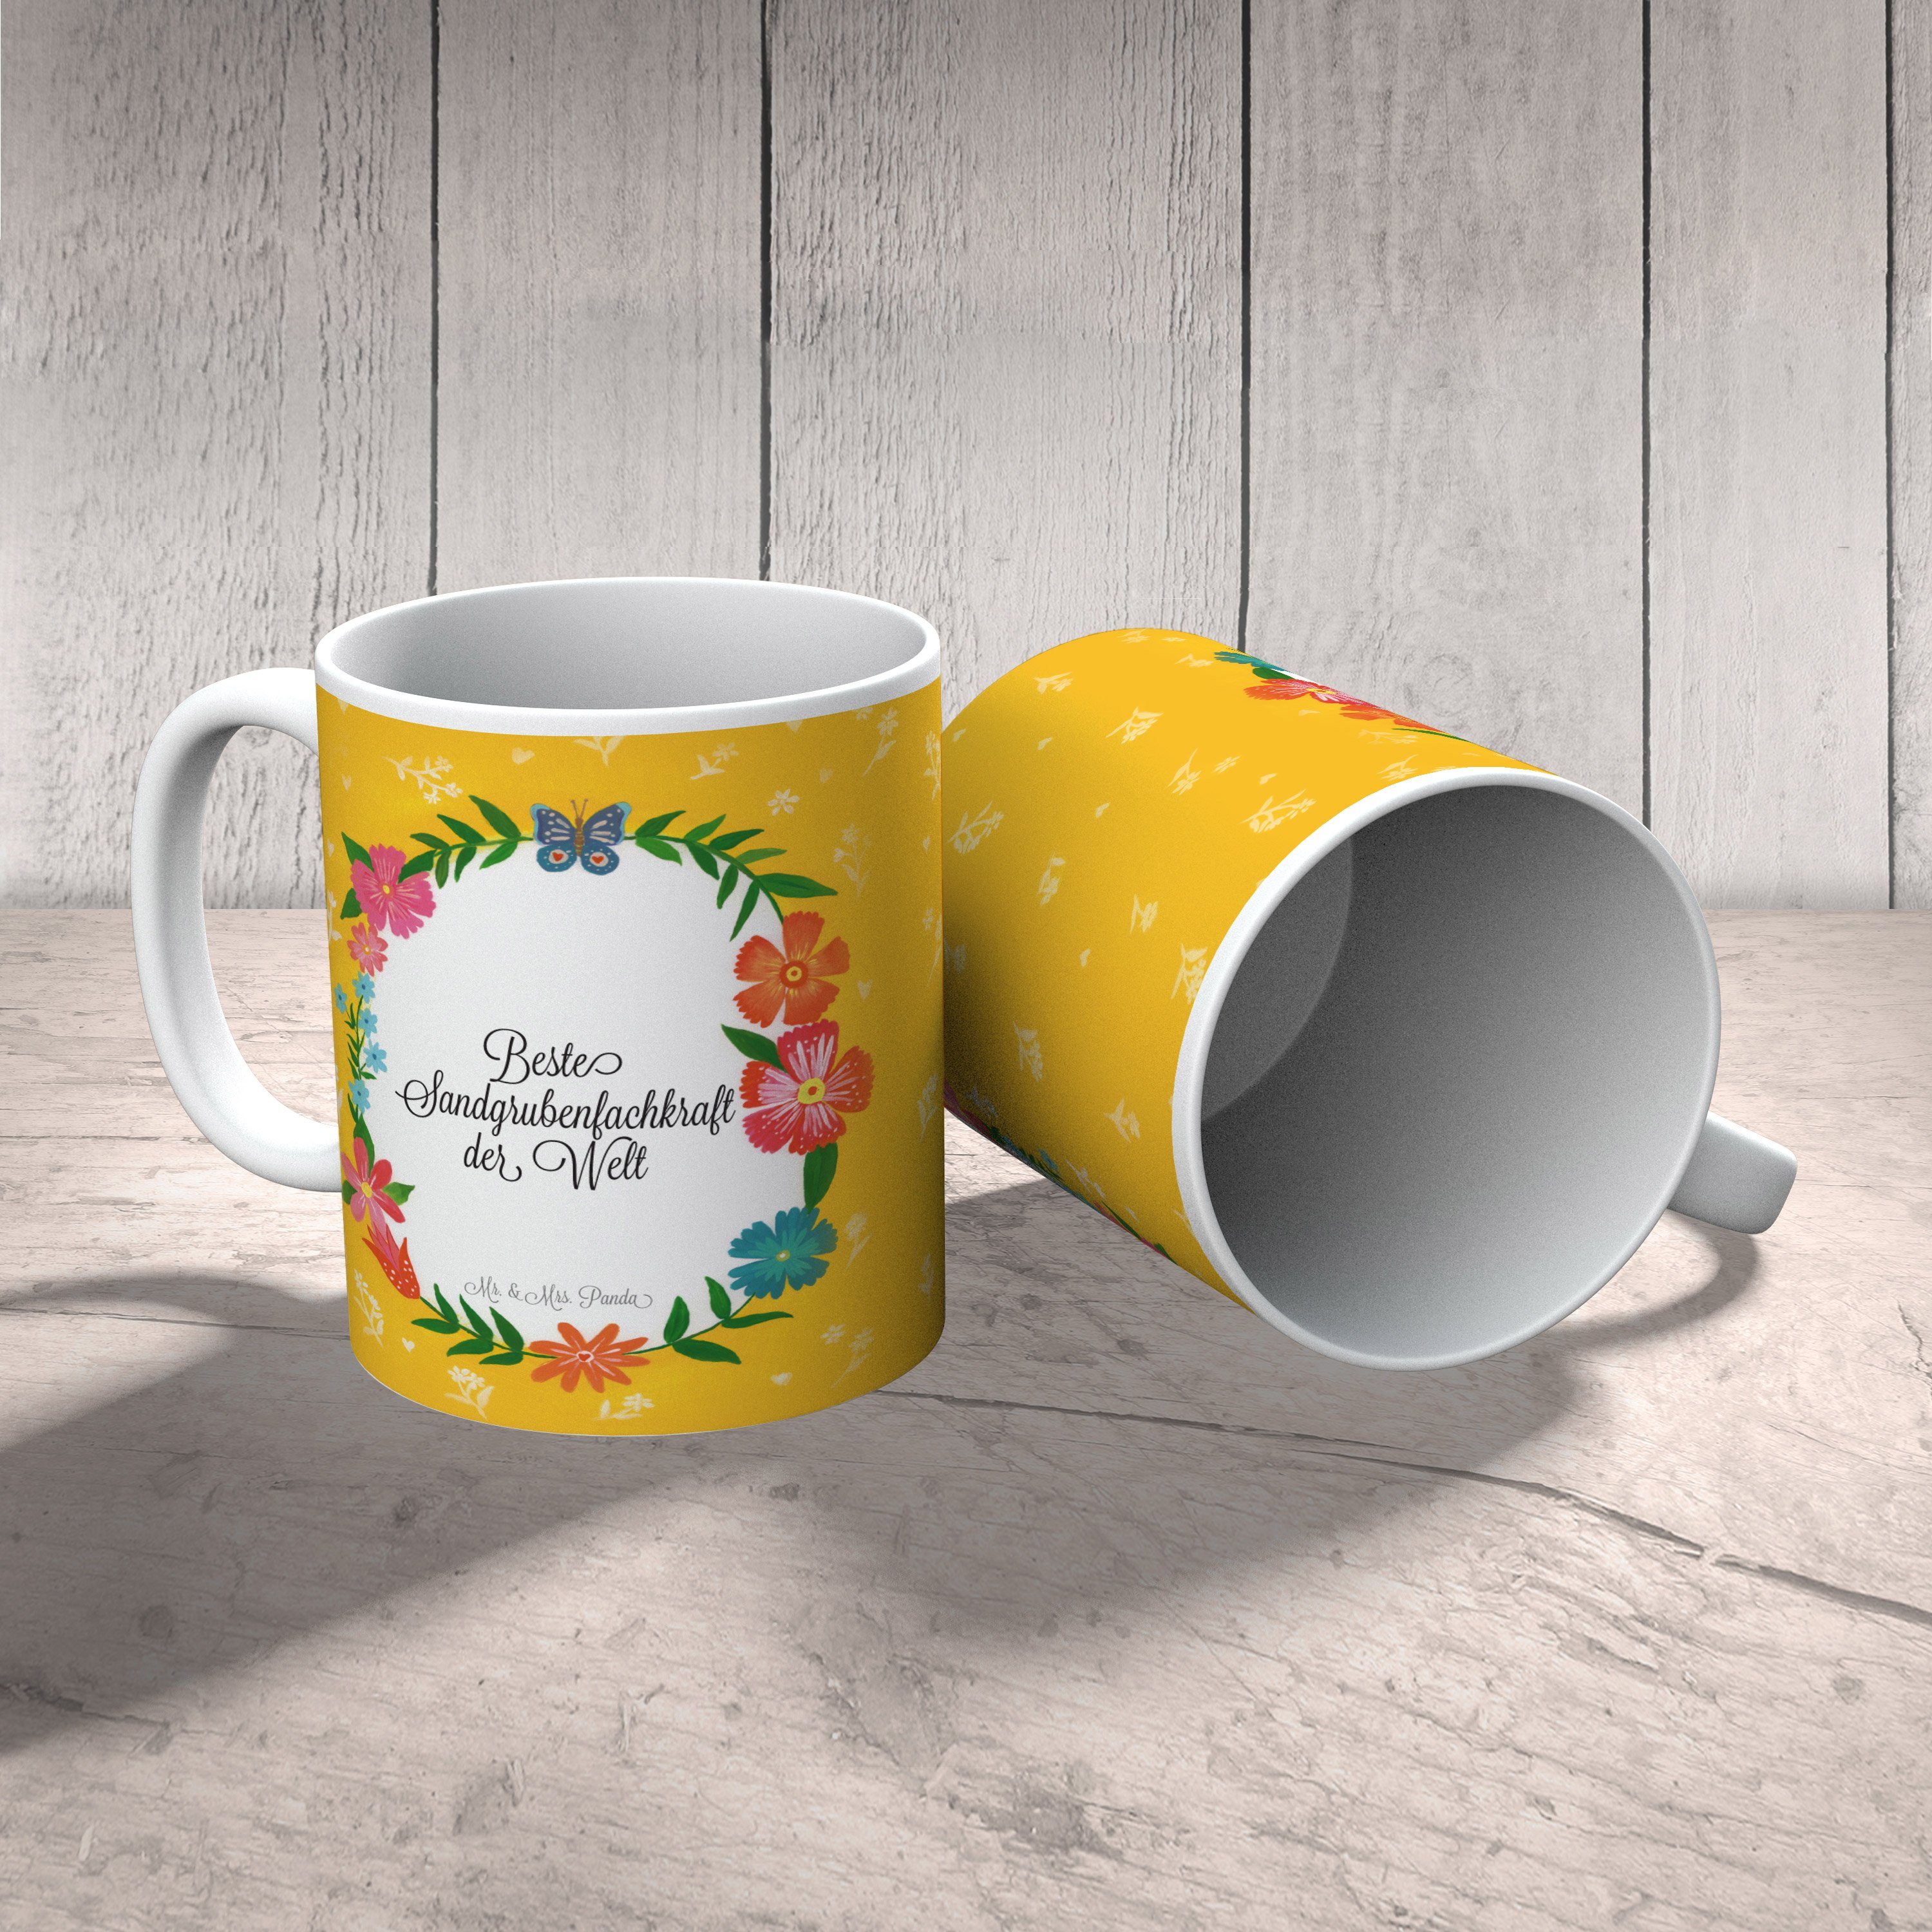 Keramik - Geschenk, Mrs. Panda Tasse Kaffeetasse, Geschenk Mr. Rente, Tasse, T, & Sandgrubenfachkraft